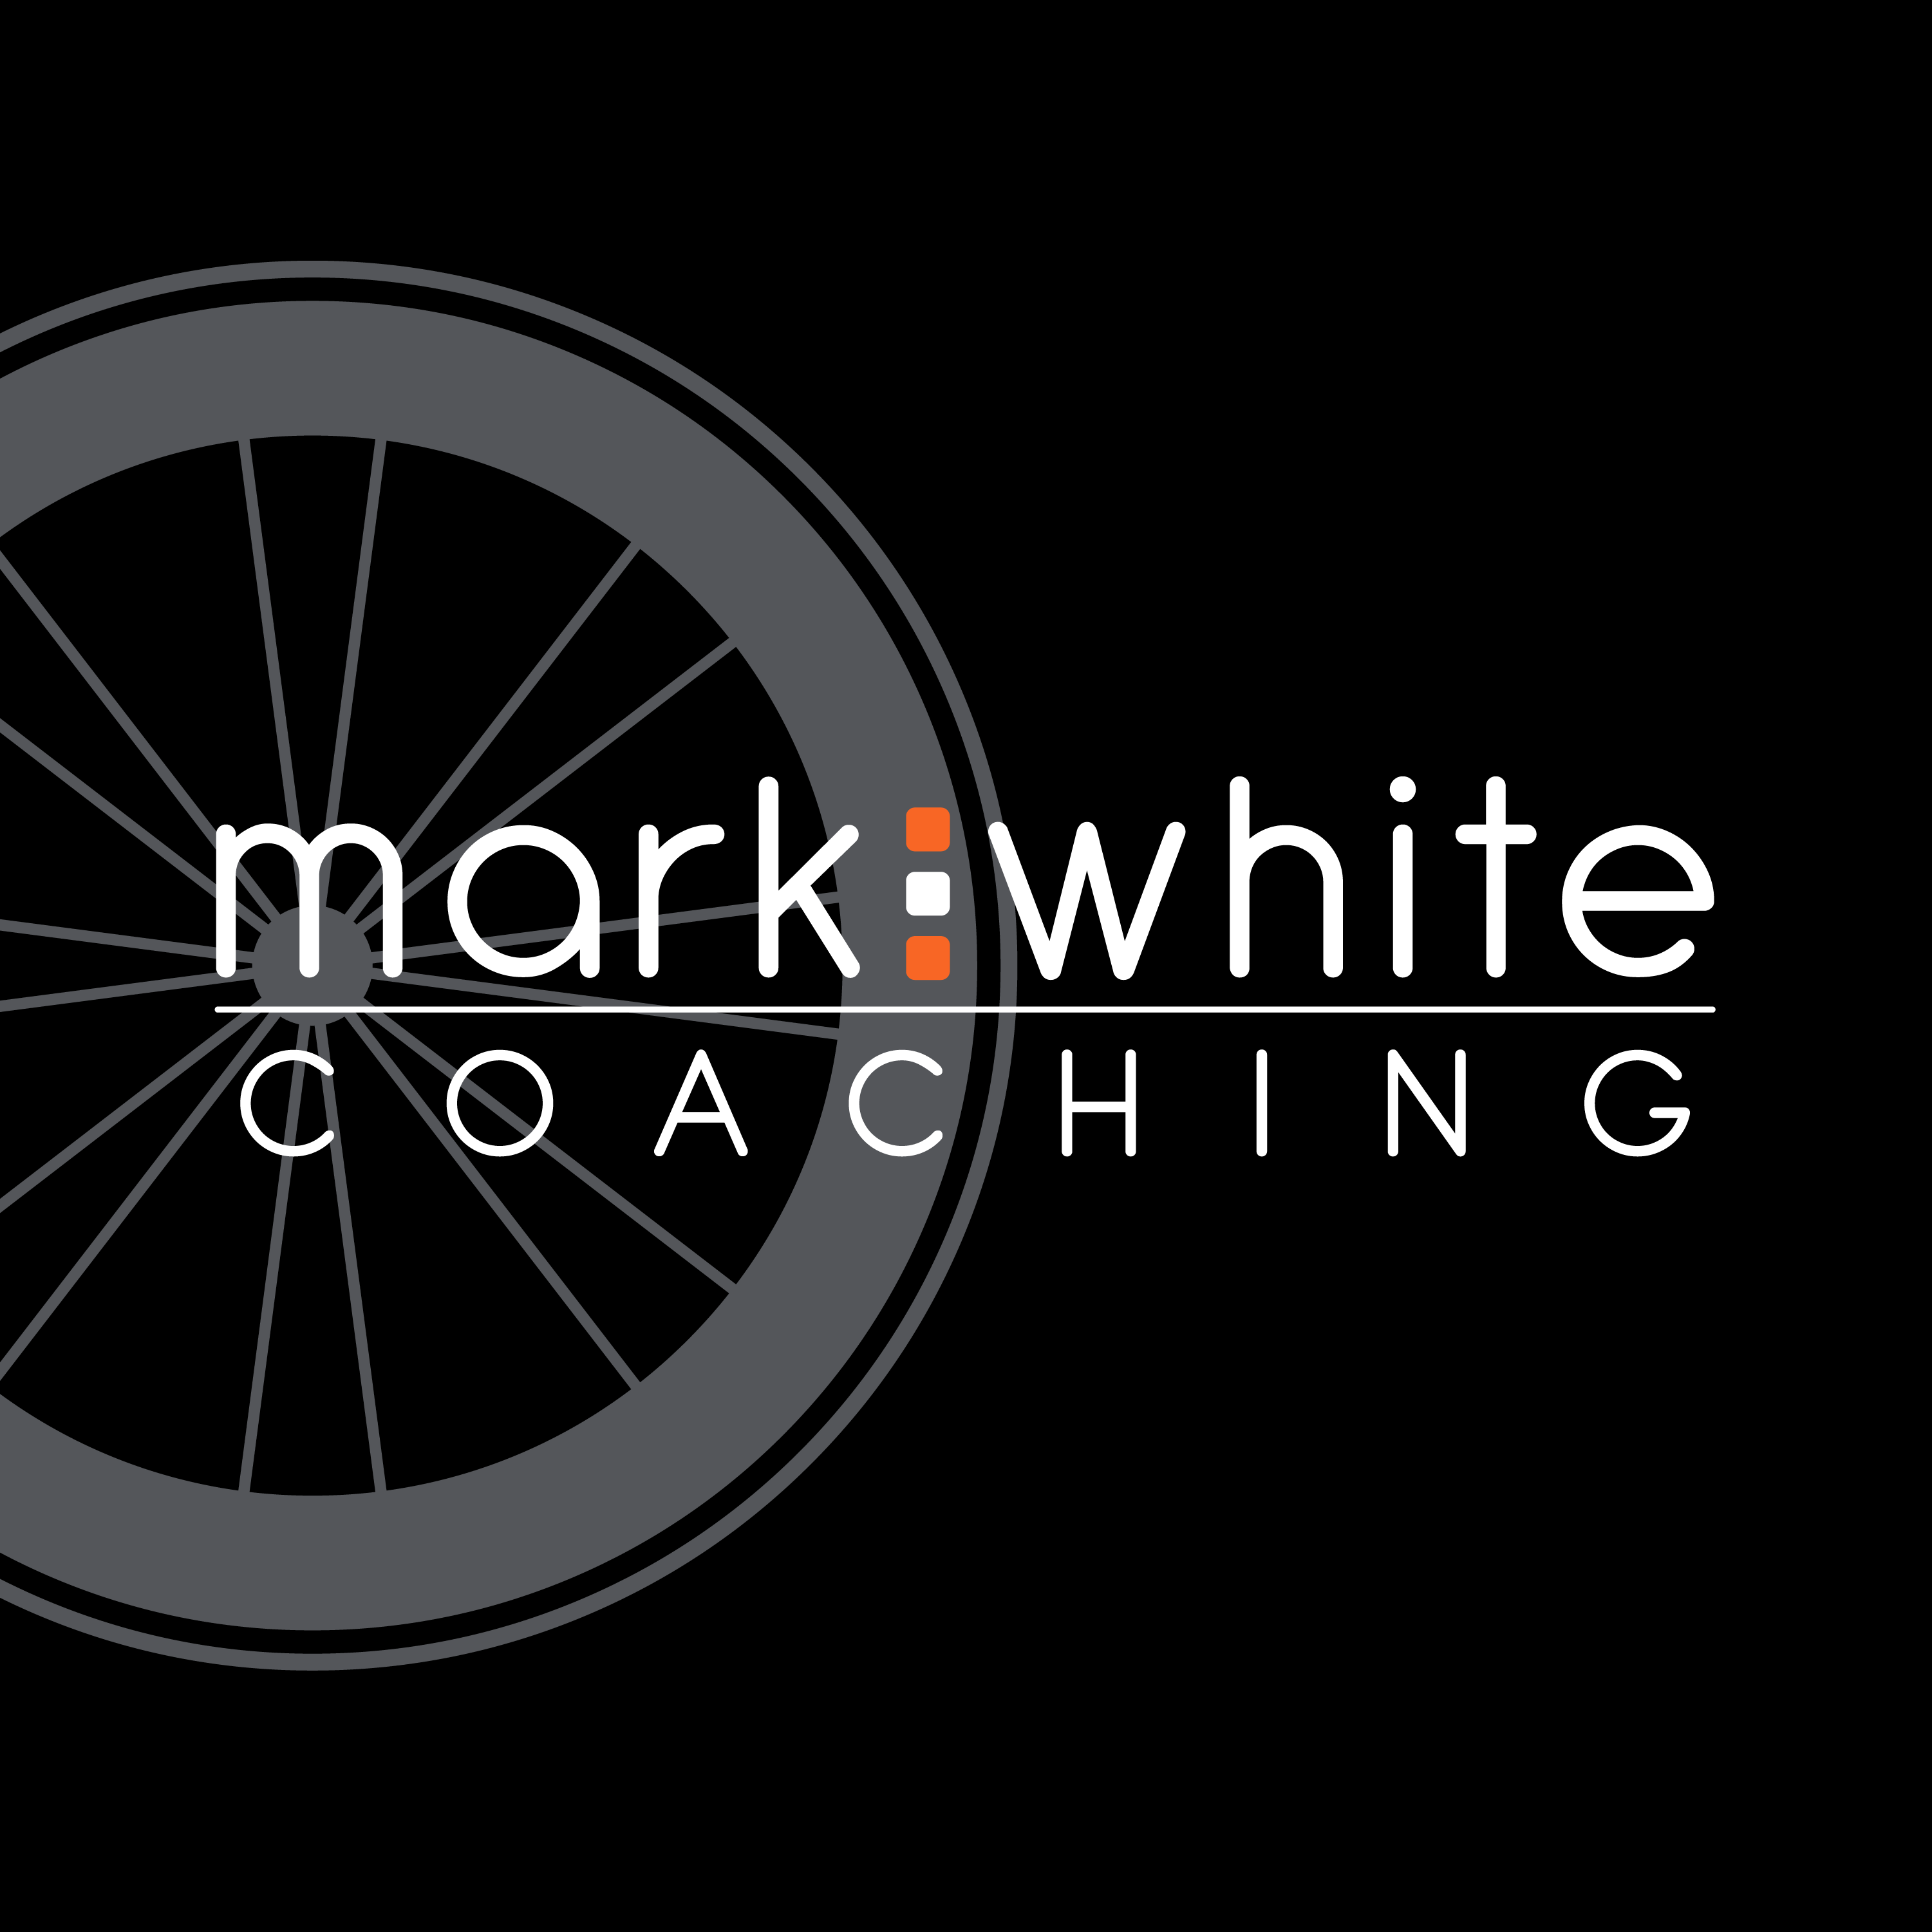 Club Image for MARK WHITE COACHING